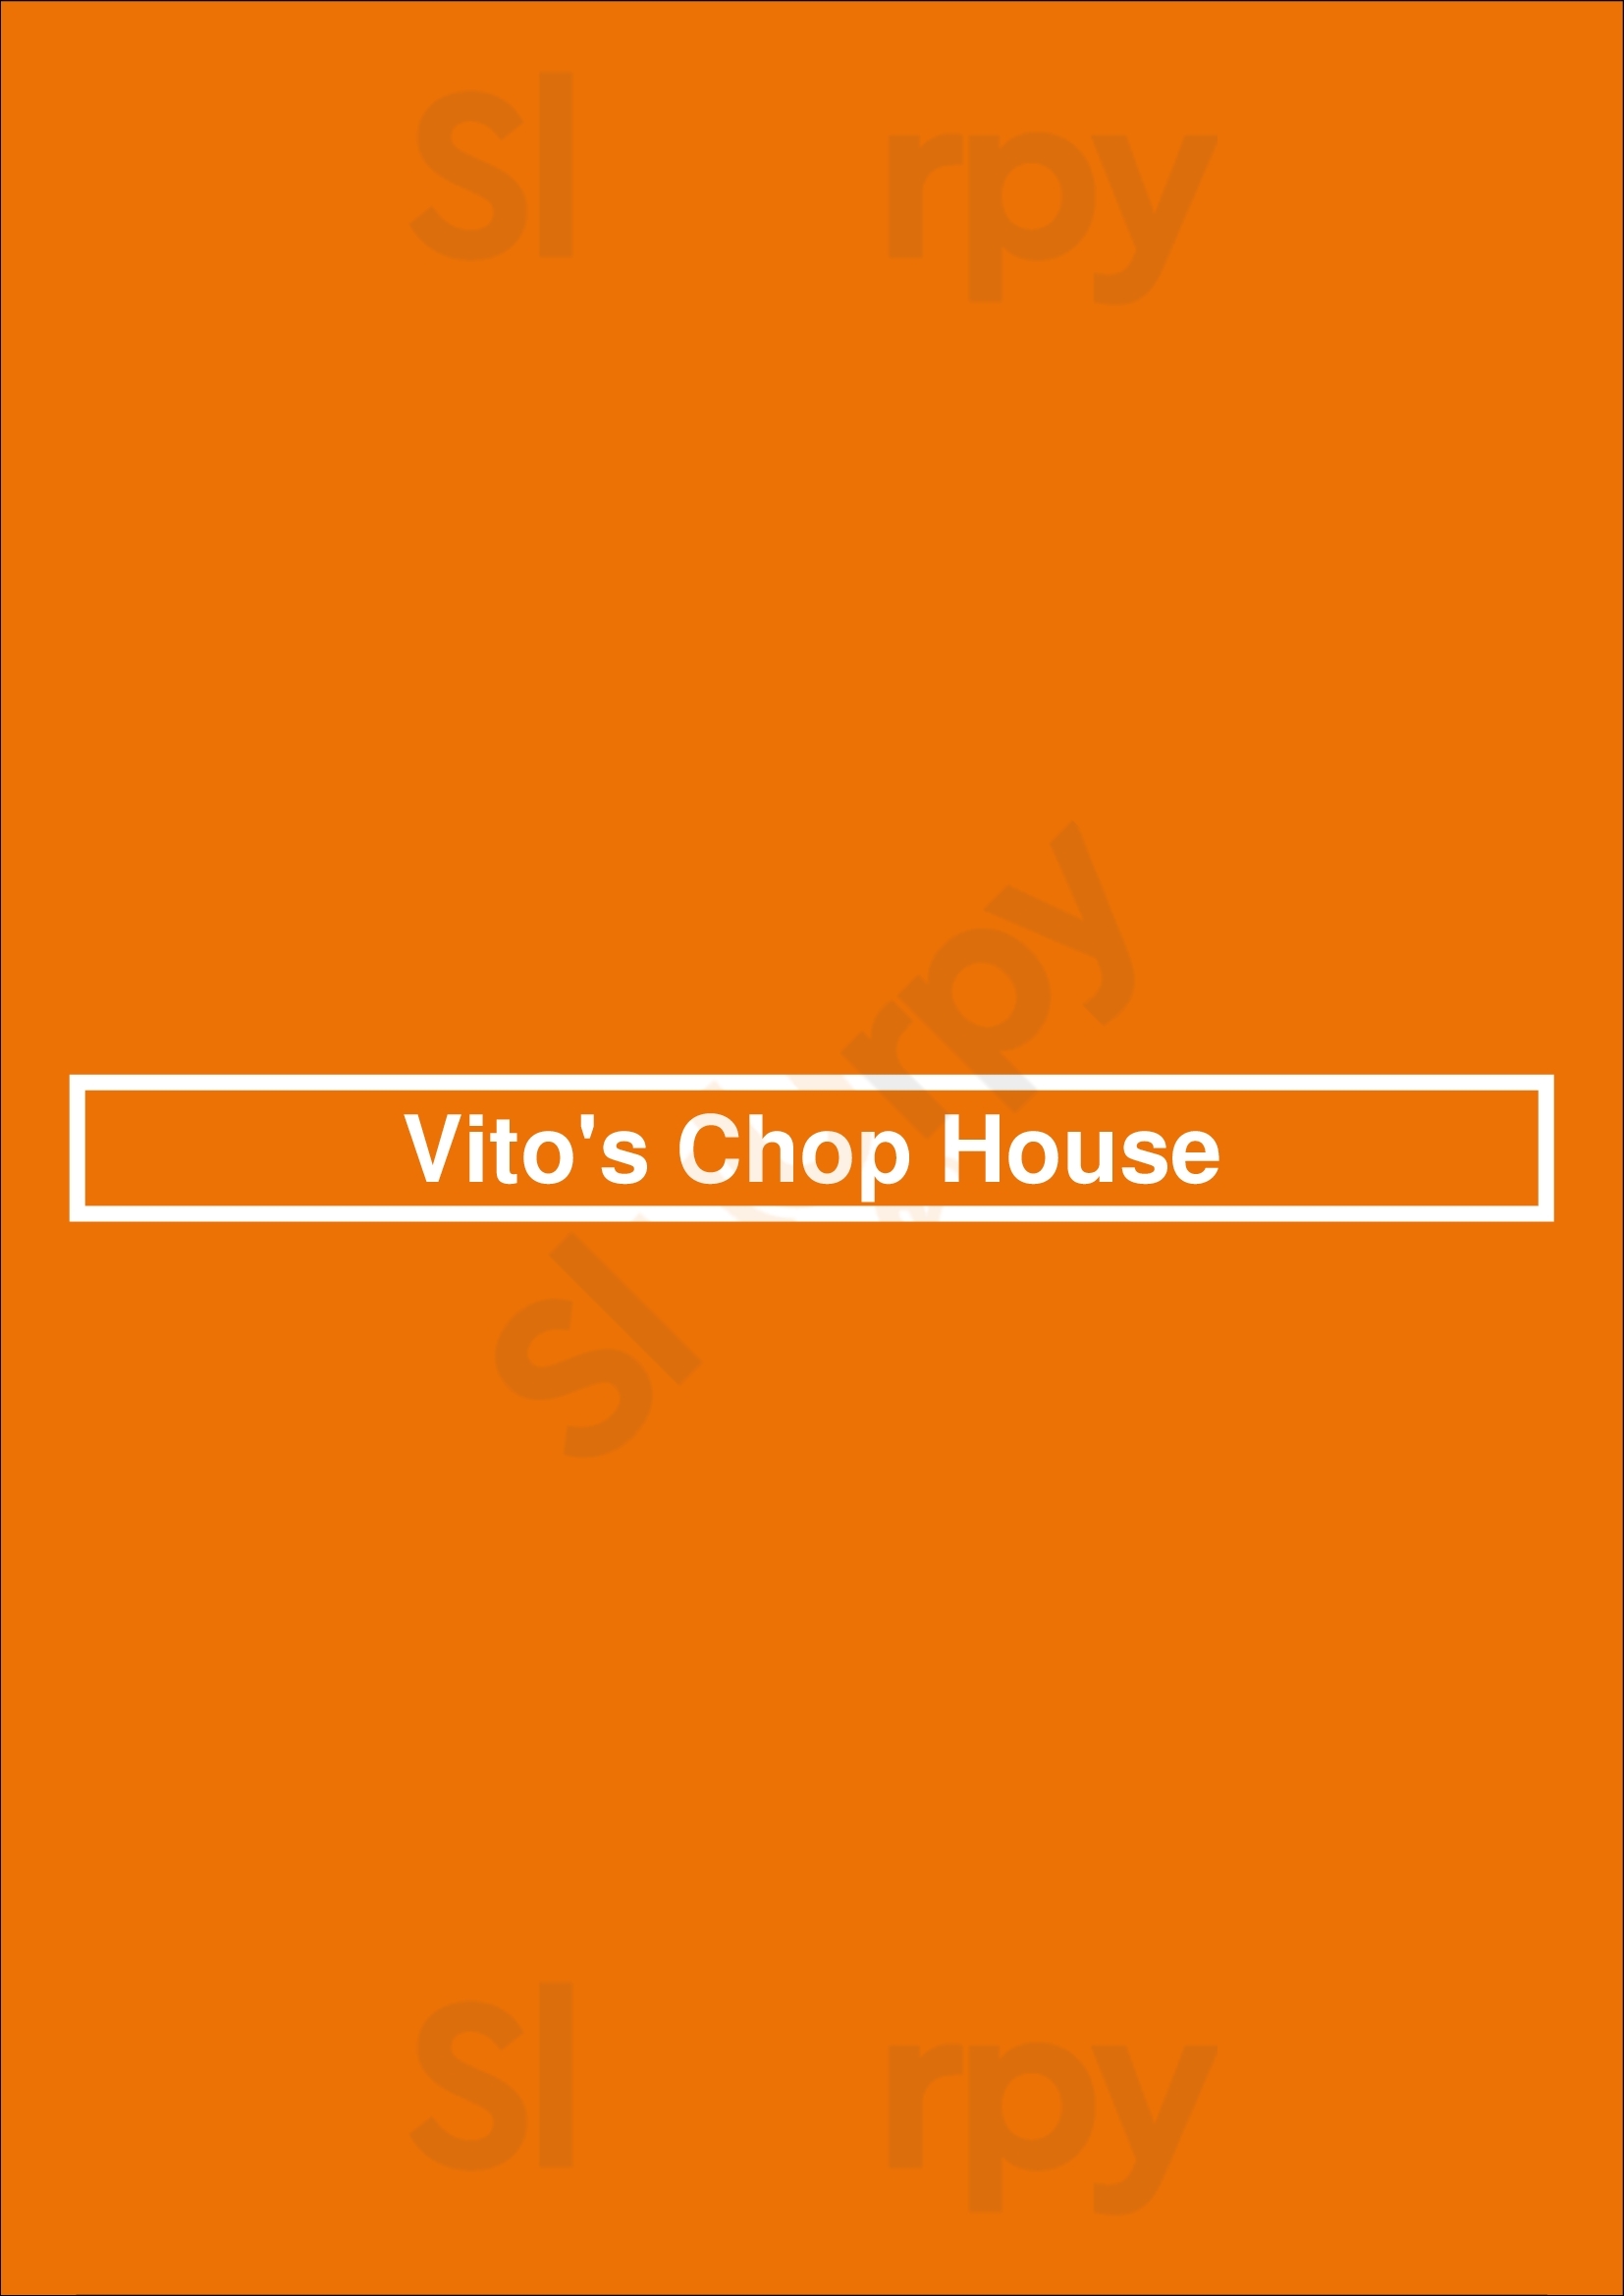 Vito's Chop House Orlando Menu - 1